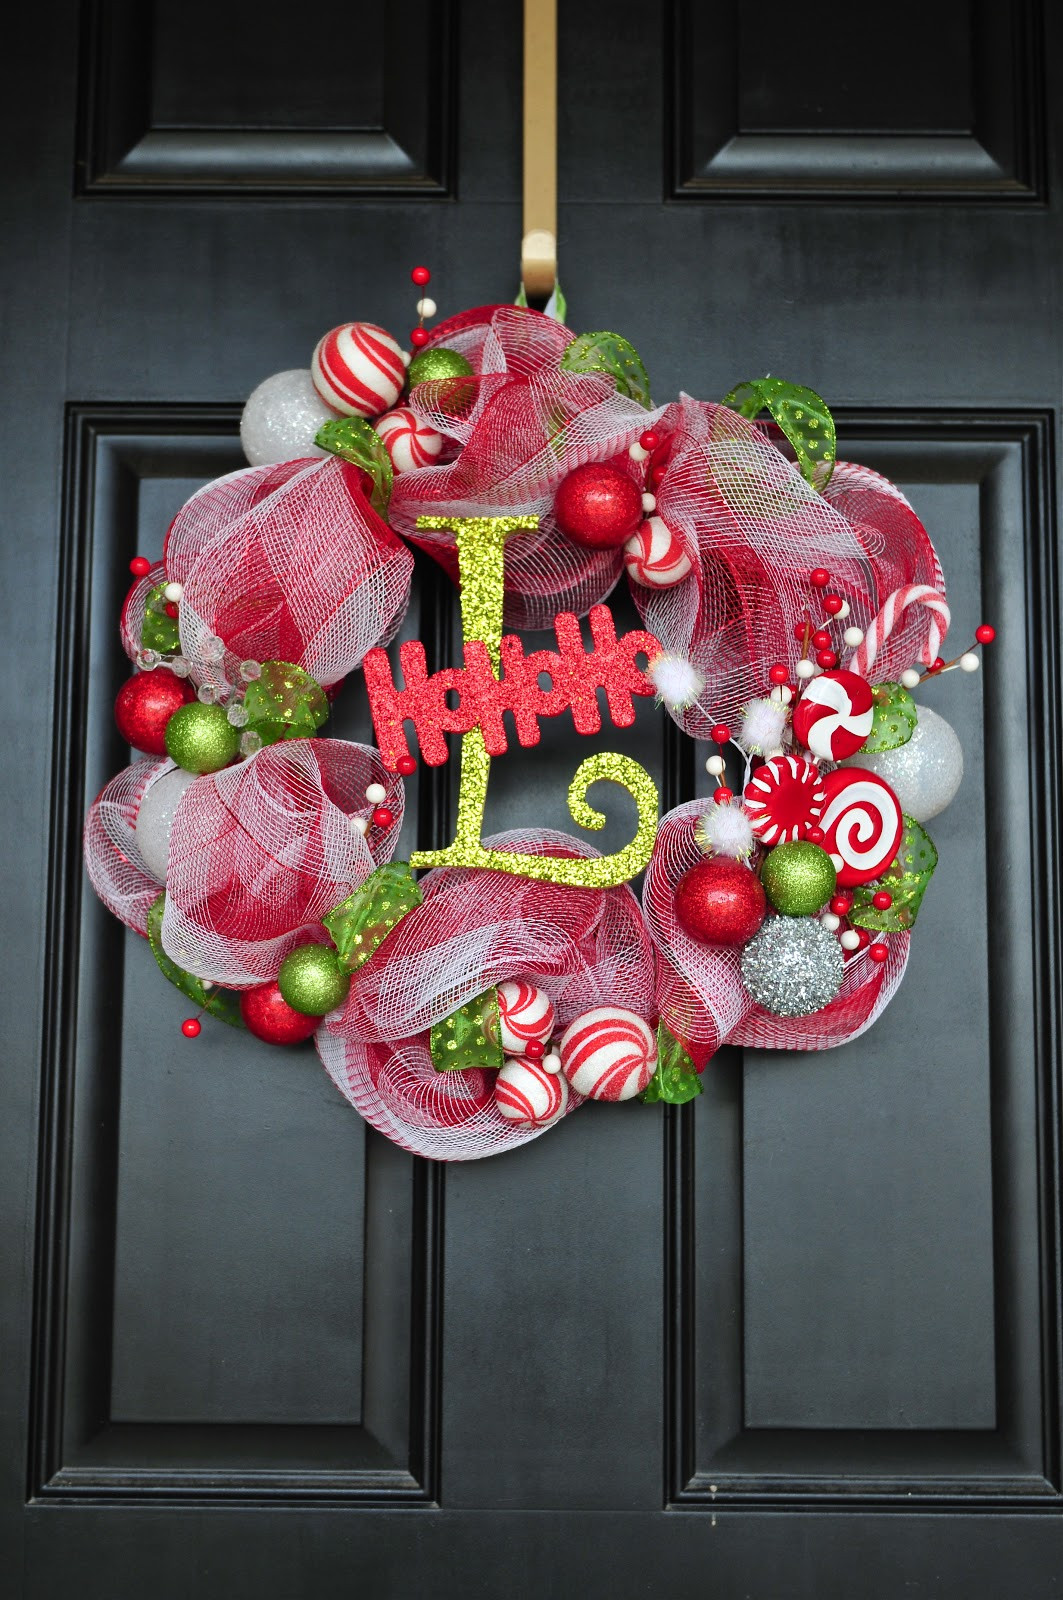 Best ideas about Christmas Wreaths DIY
. Save or Pin DIY Til We Die Easy Christmas mesh wreaths Now.